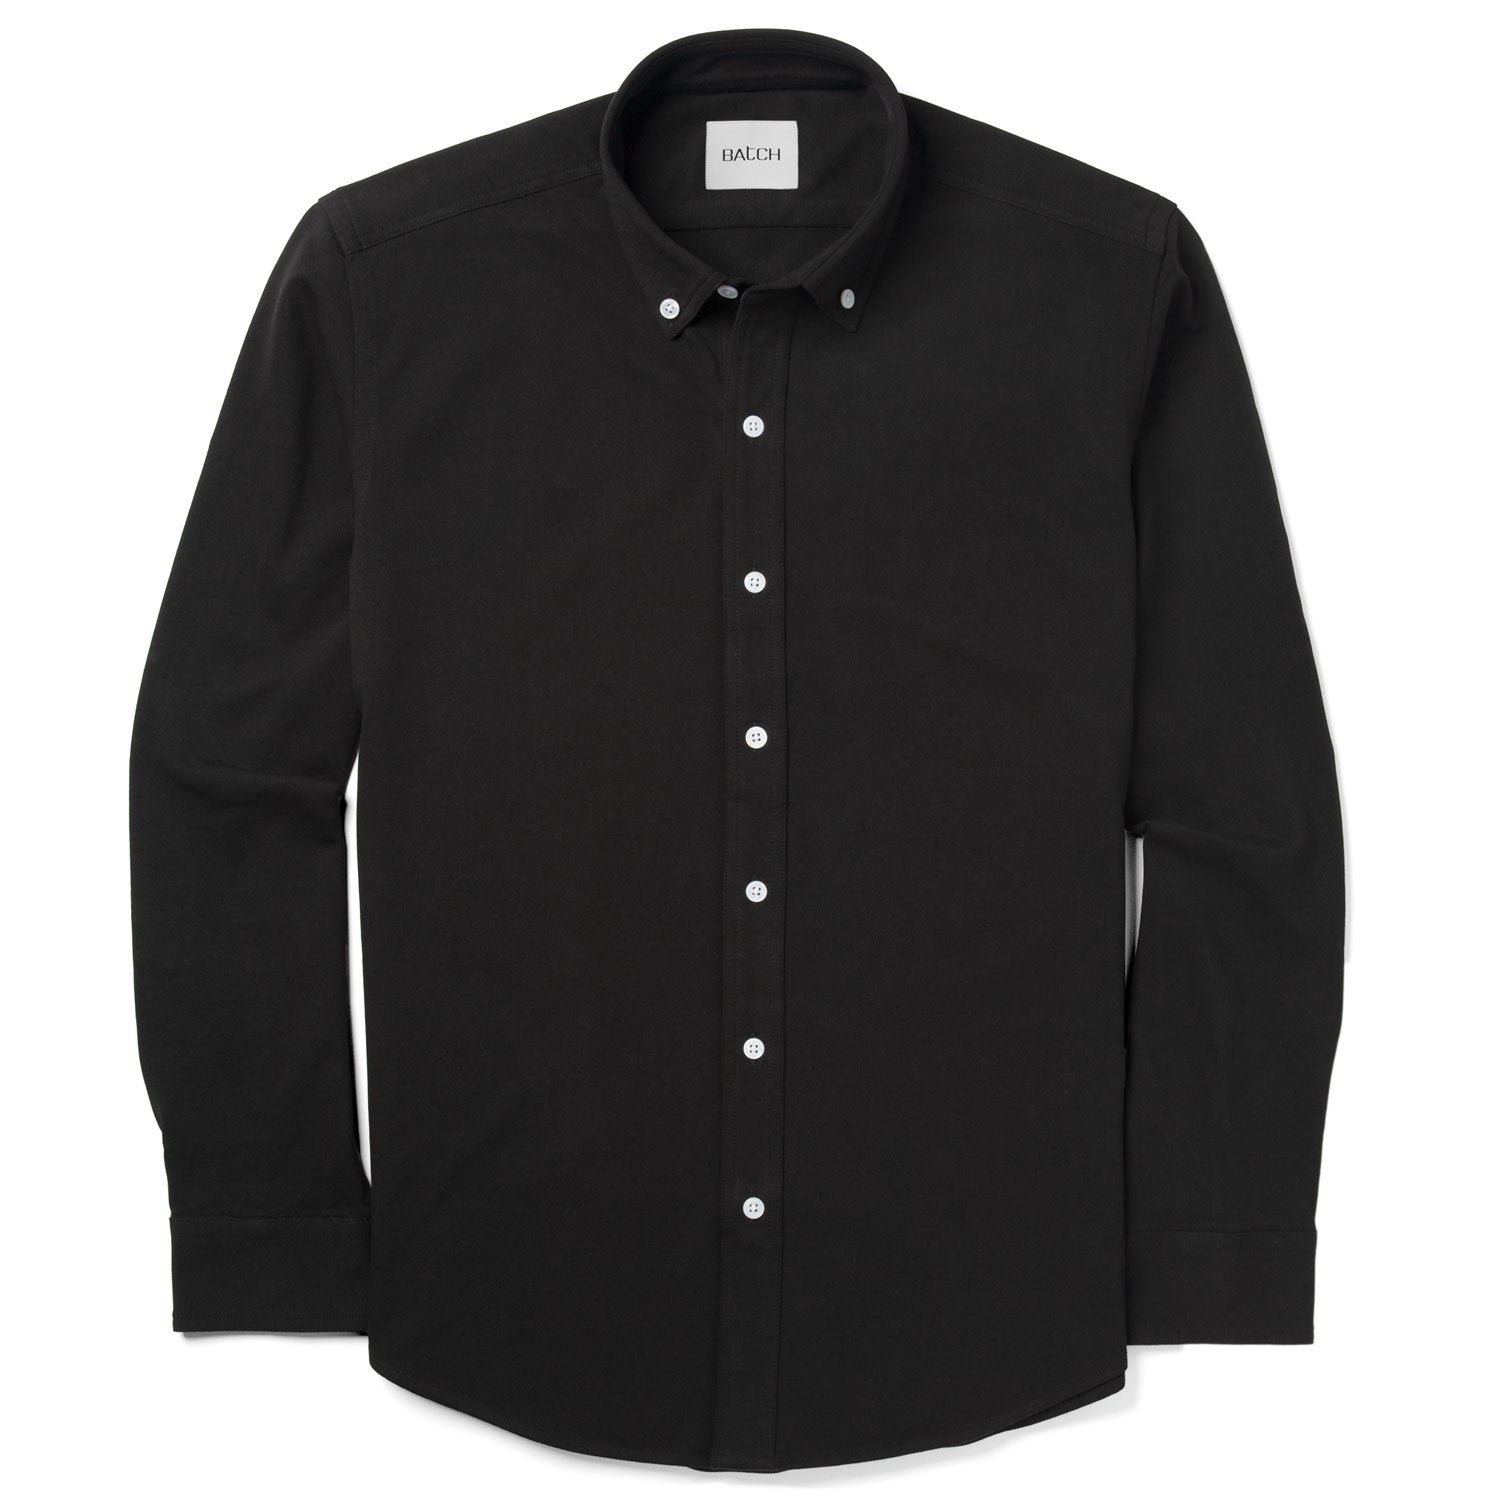 Essential Casual Knit Shirt - WB Black Cotton Knit Pique